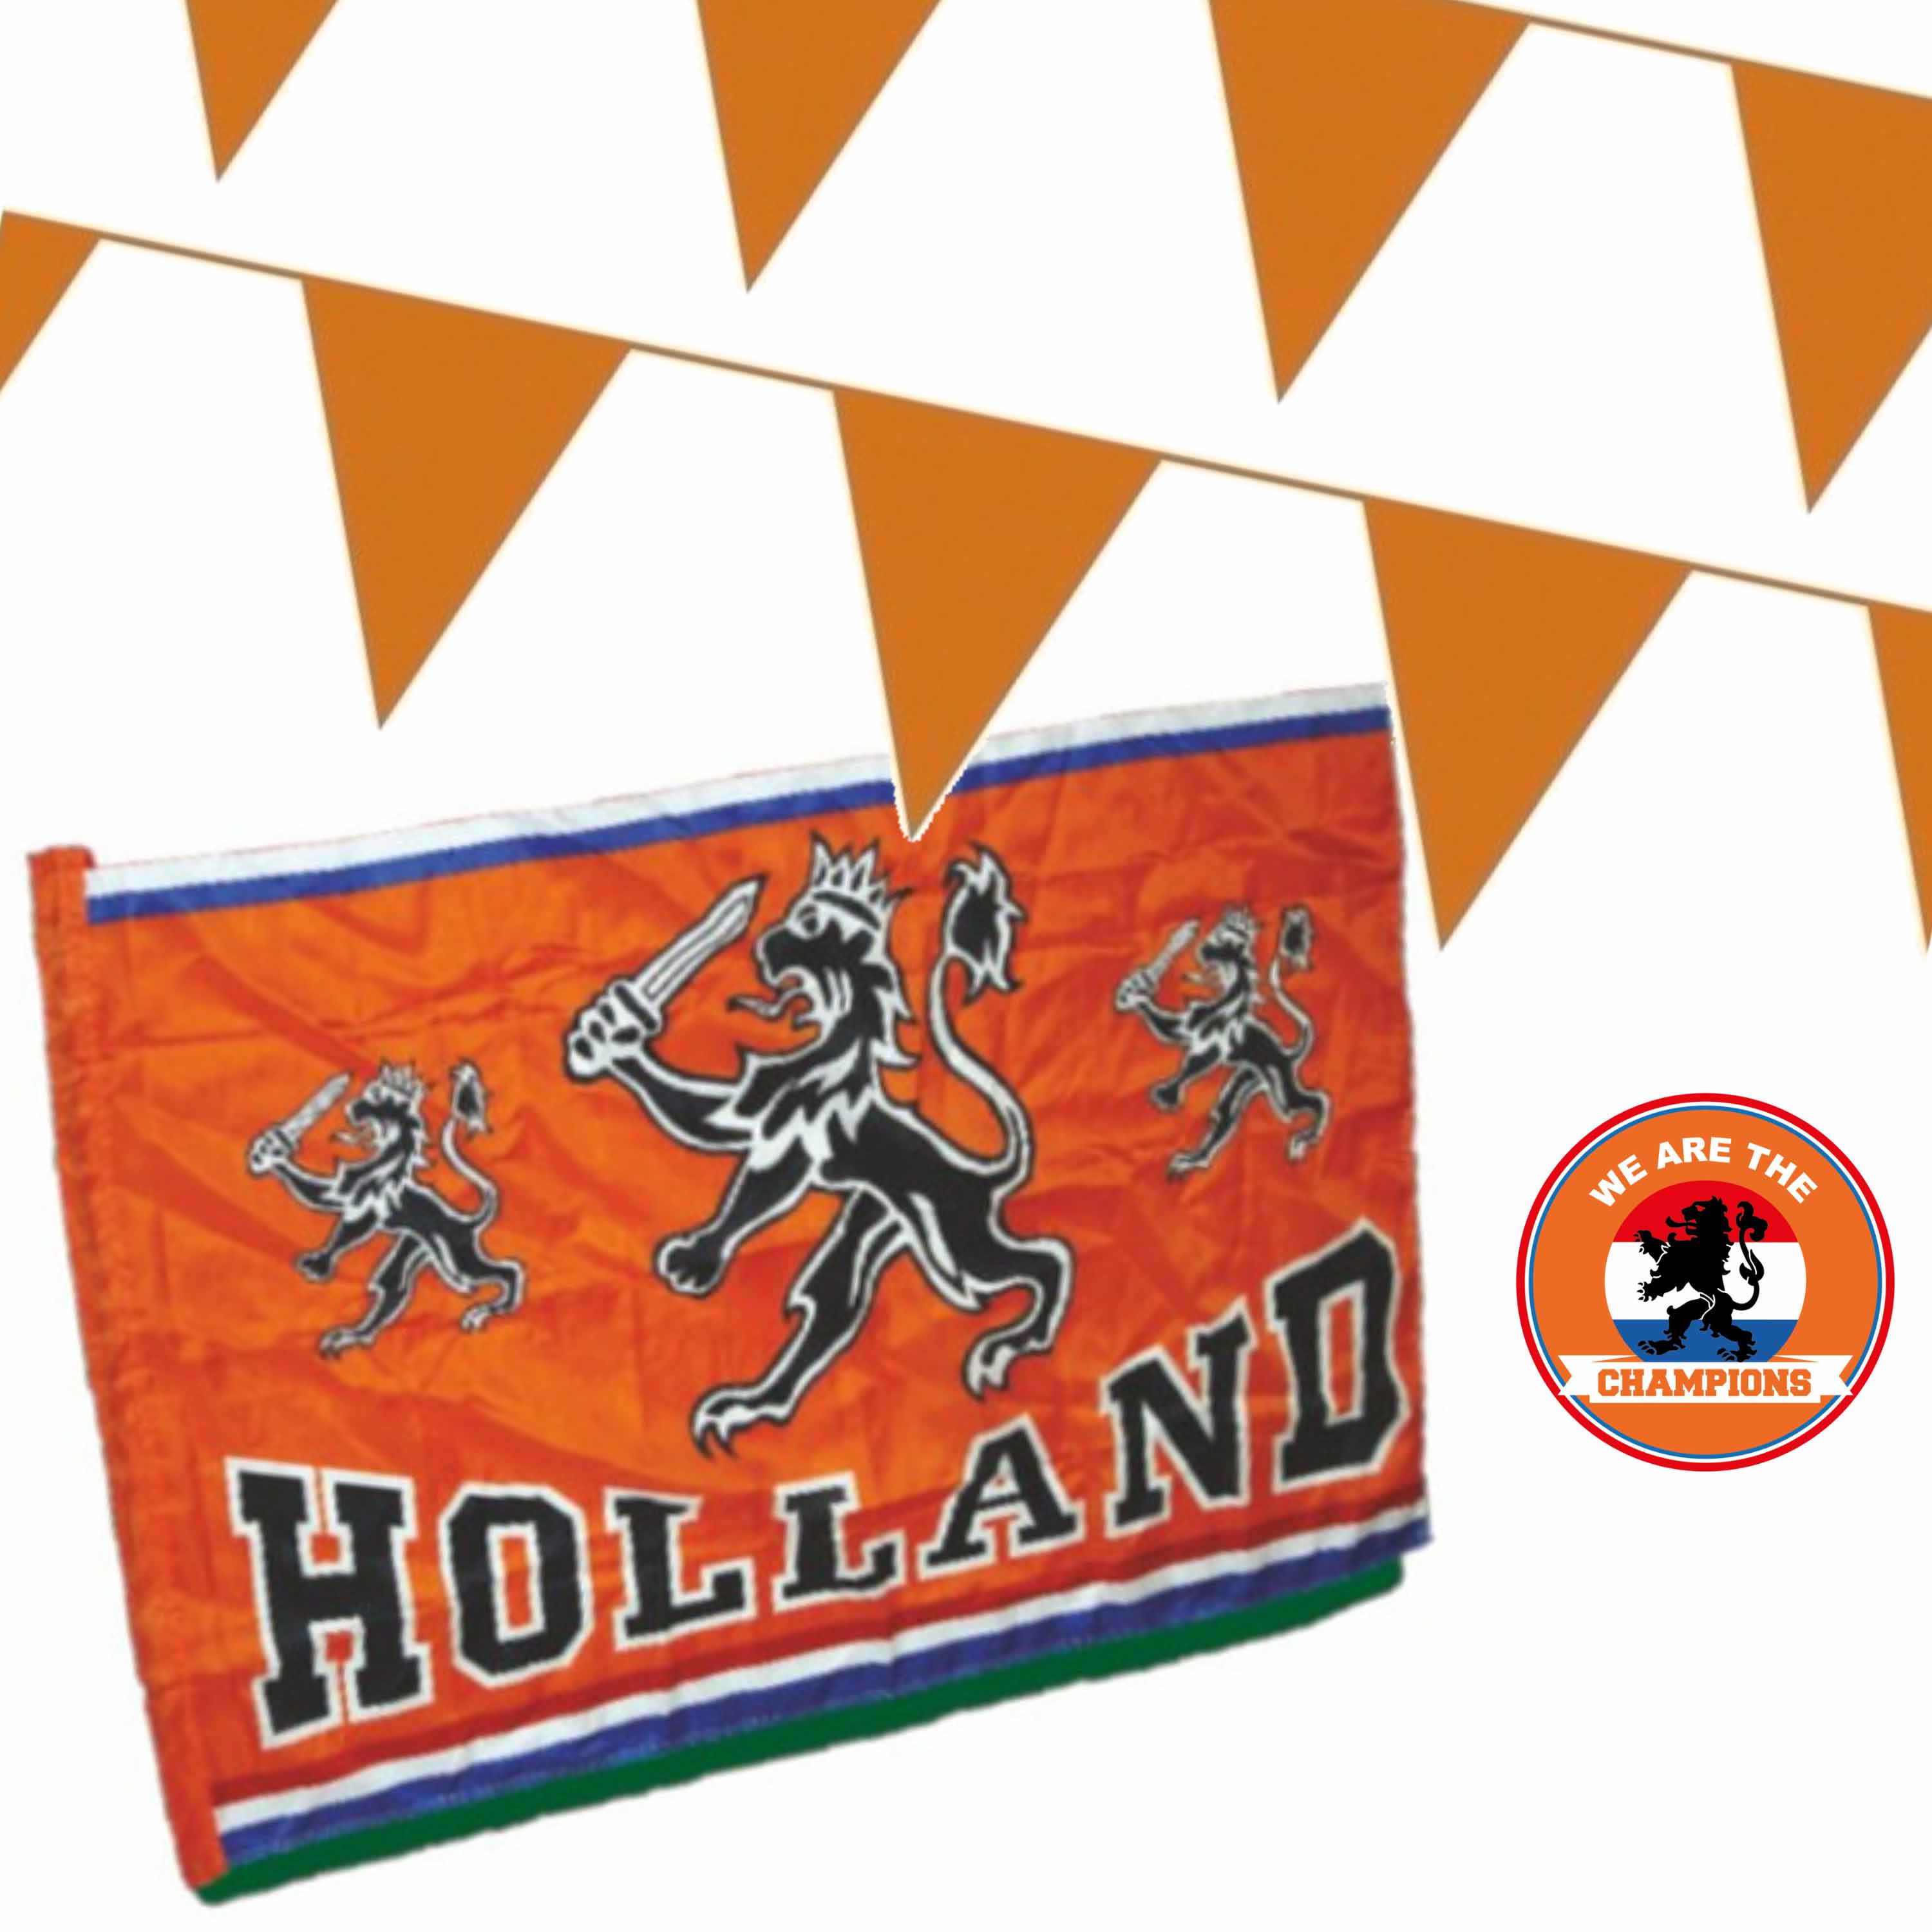 Ek oranje straat- huis versiering pakket met oa 1x Holland spandoek, 300 meter oranje vlaggenlijnen